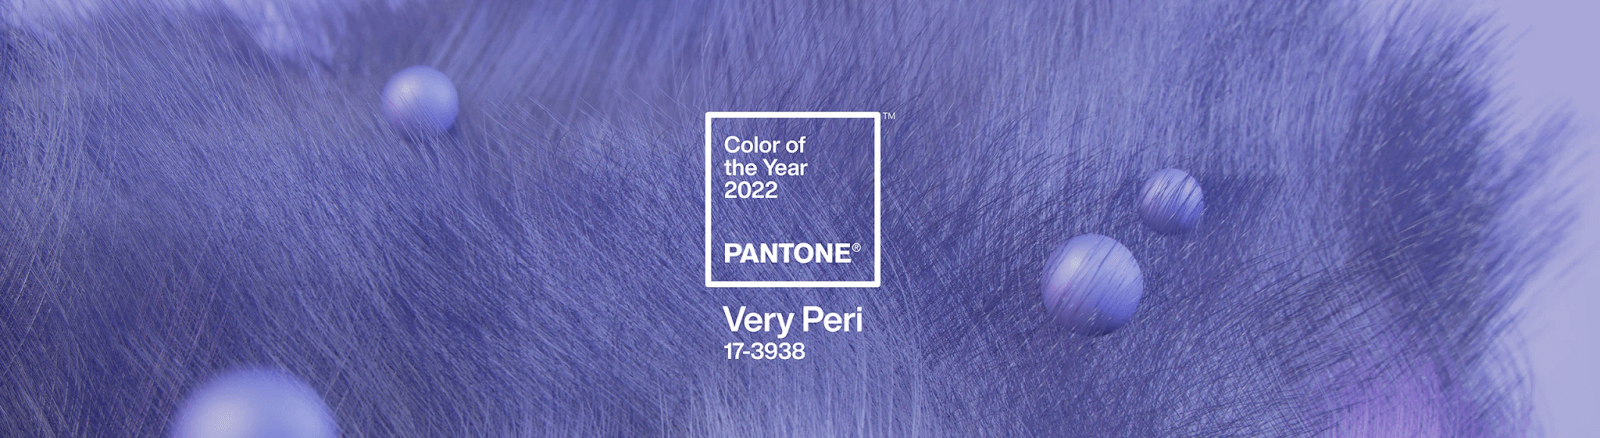 Цвет 2022 года Very Peri